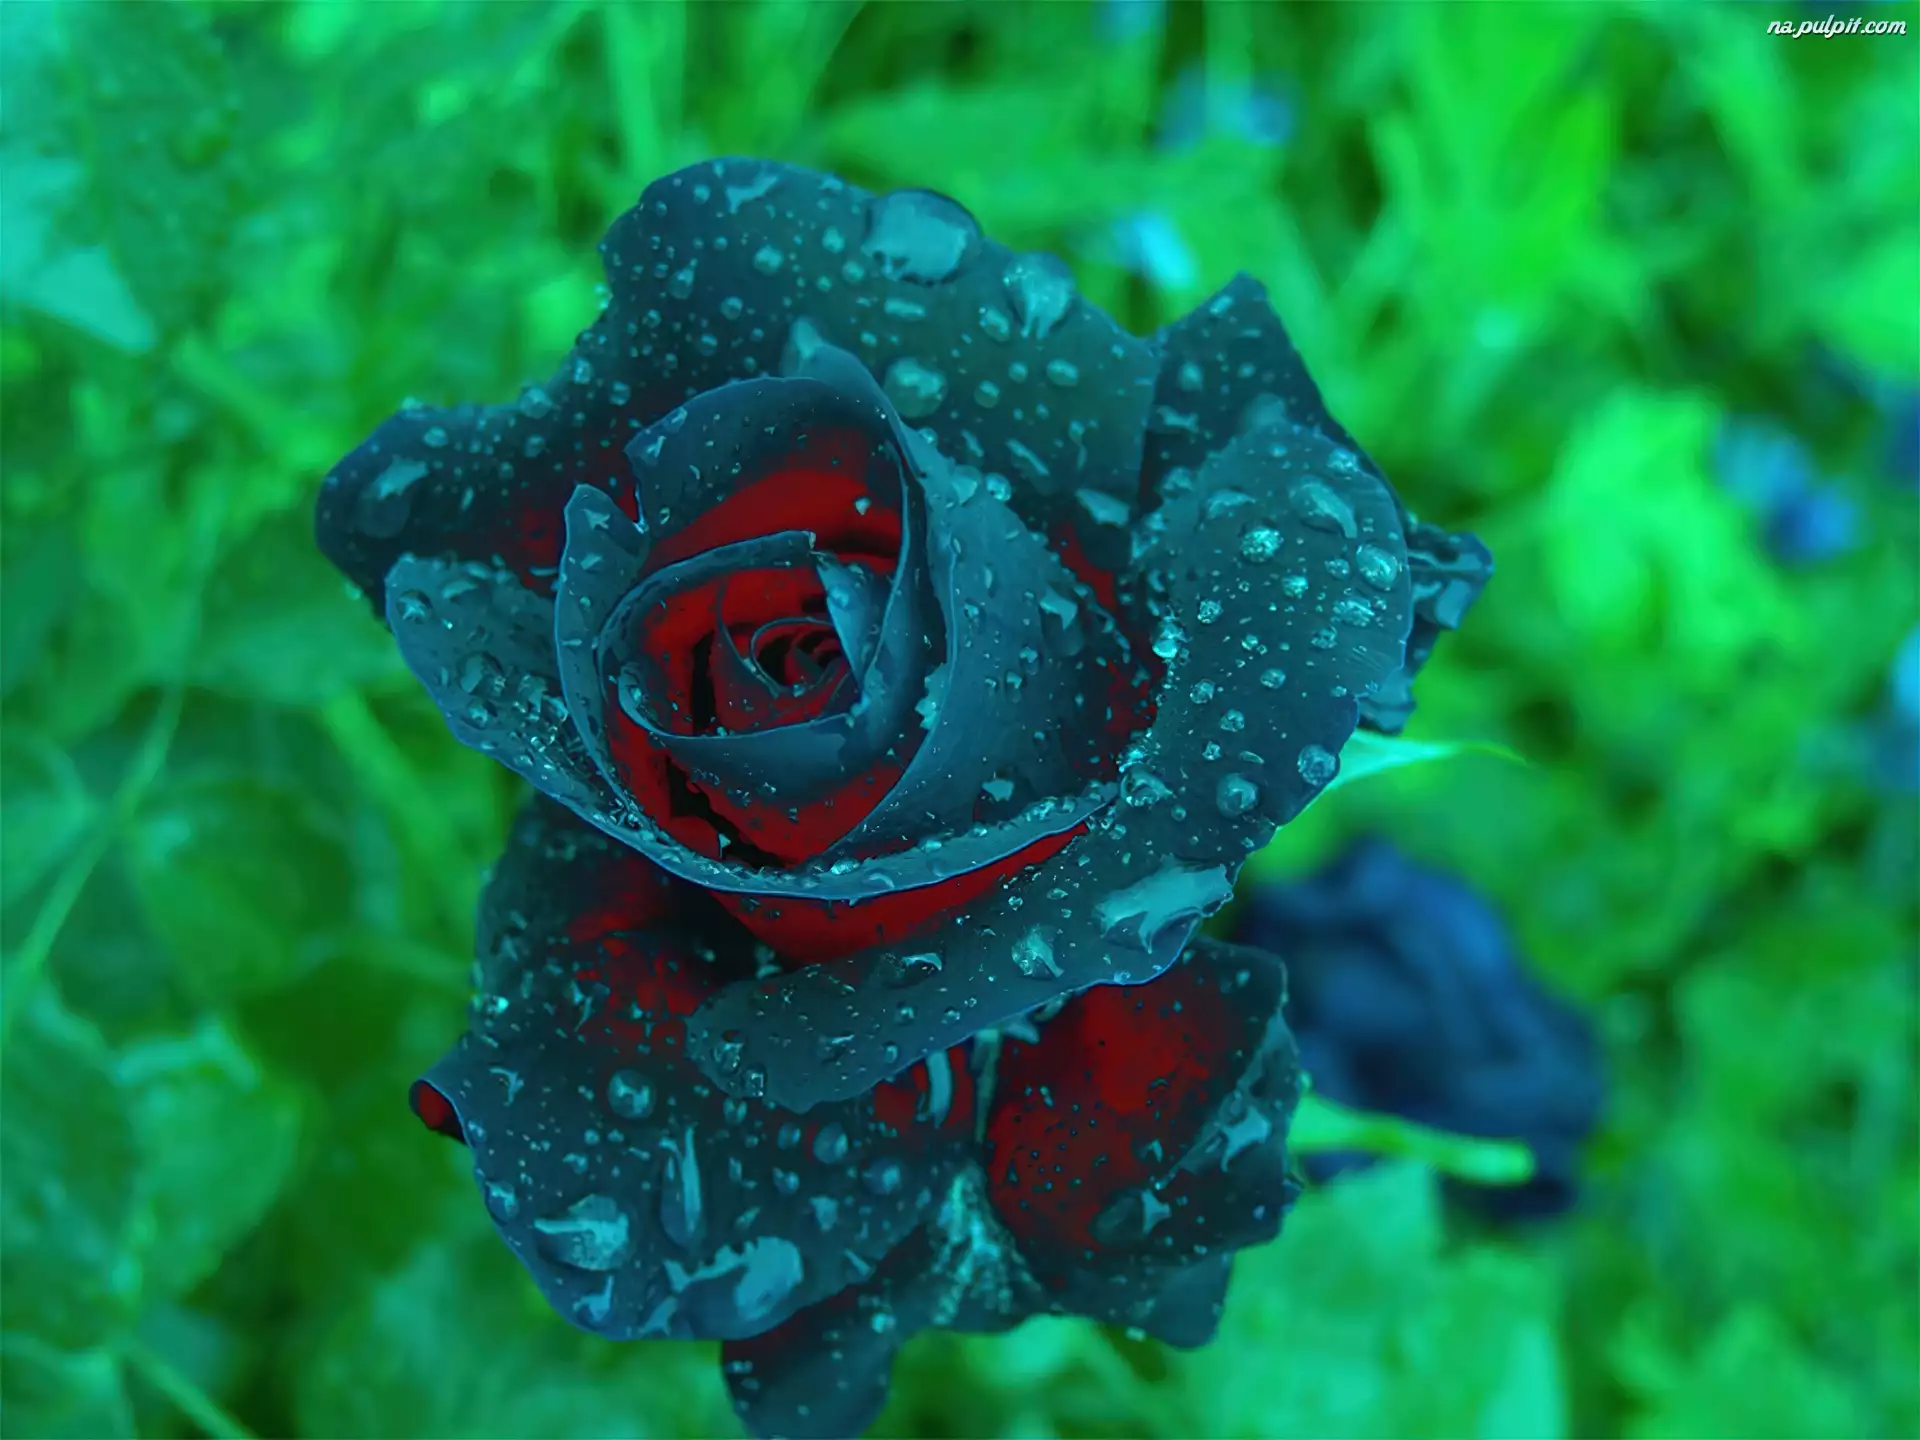 Deszczu, Róża, Krople